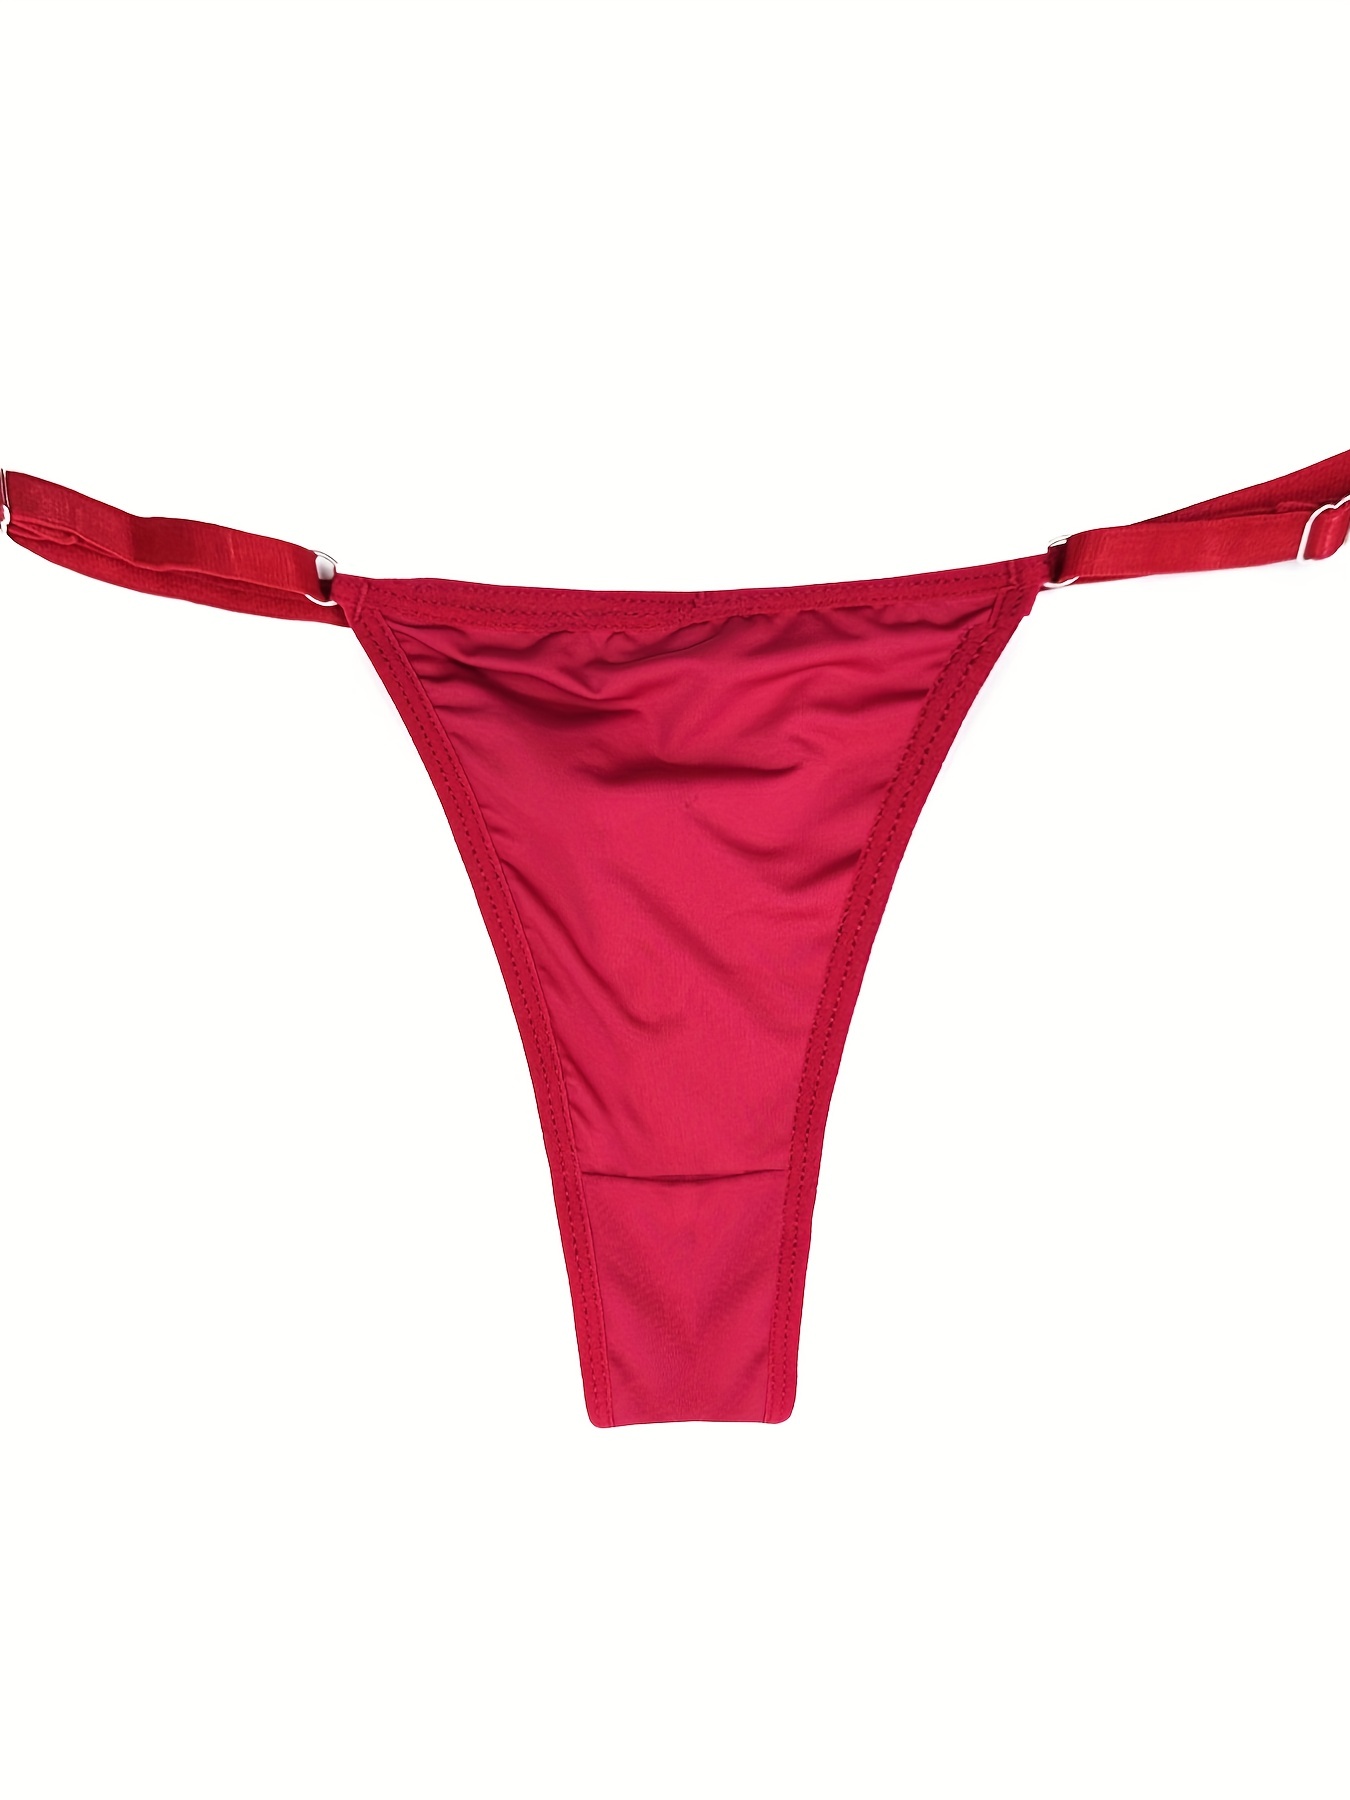 Women underwear Plume